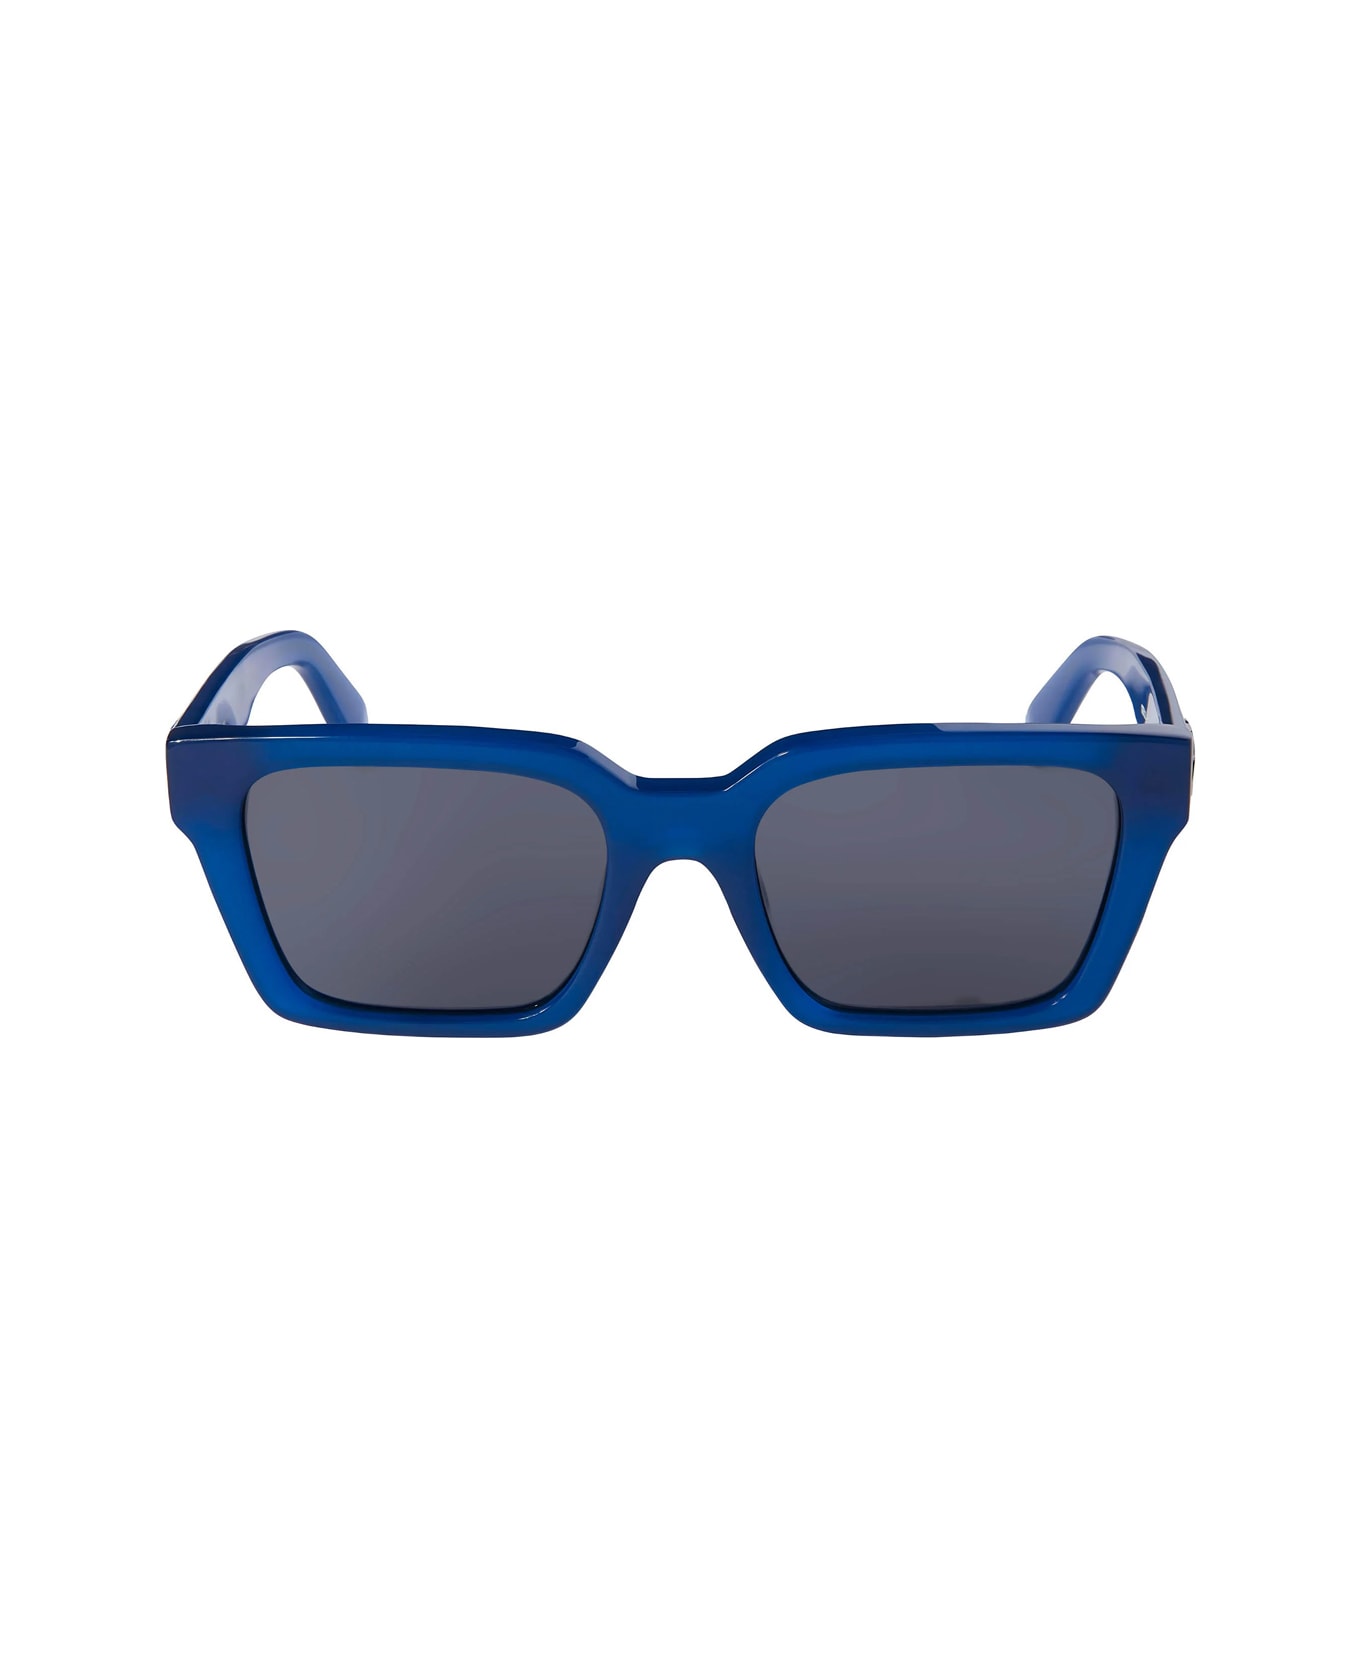 Off-White Oeri111 Branson 4507 Blue Sunglasses - Blu